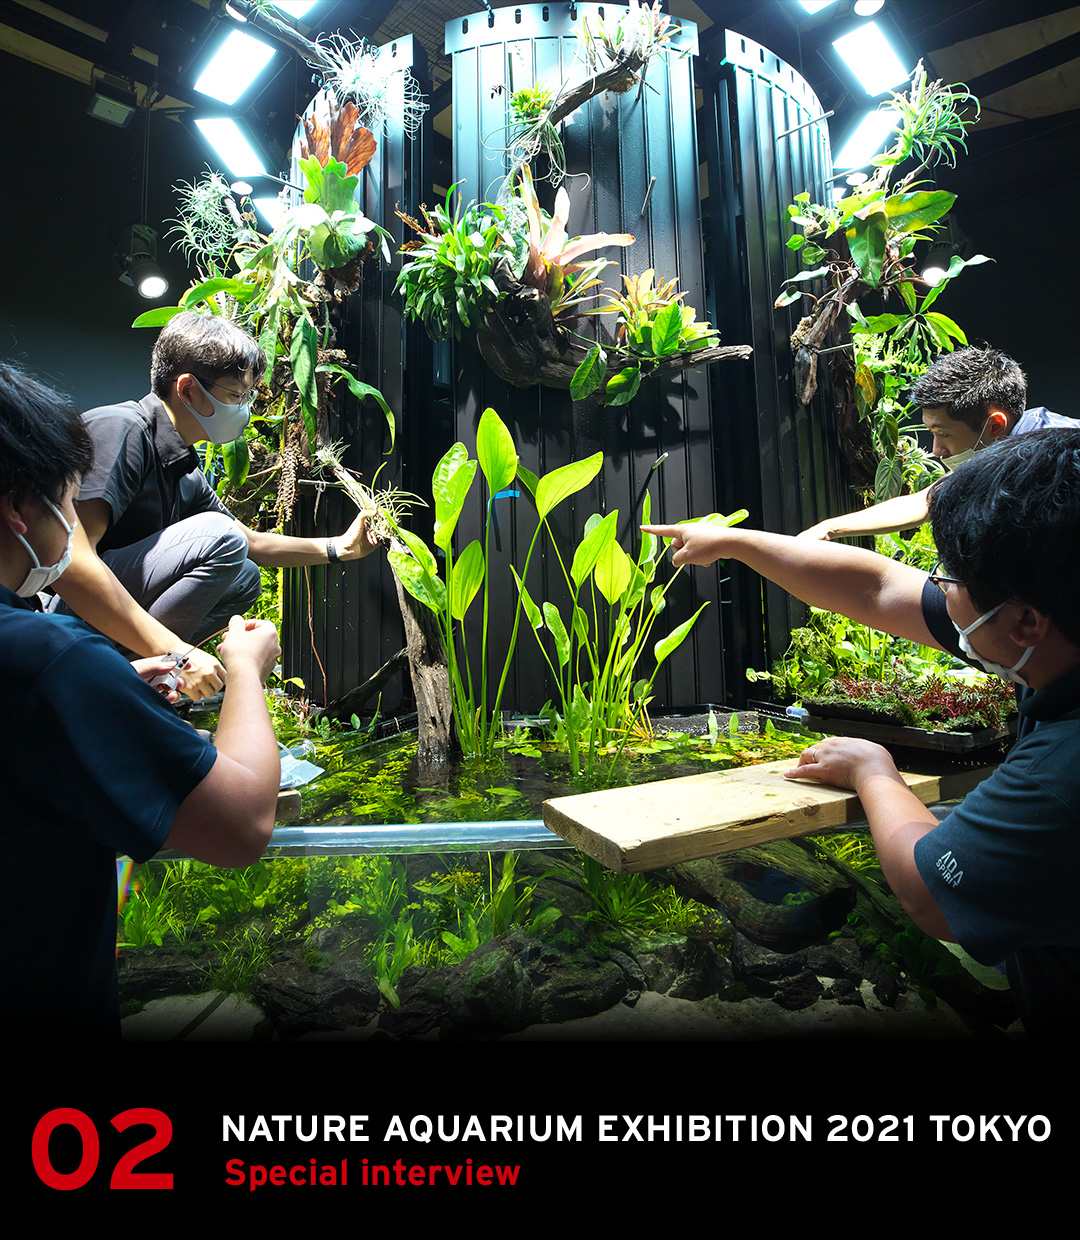 NATURE AQUARIUM EXHIBITION 2021 TOKYO Special interview: Kyoshiro Kameyama & Kota Iwahori